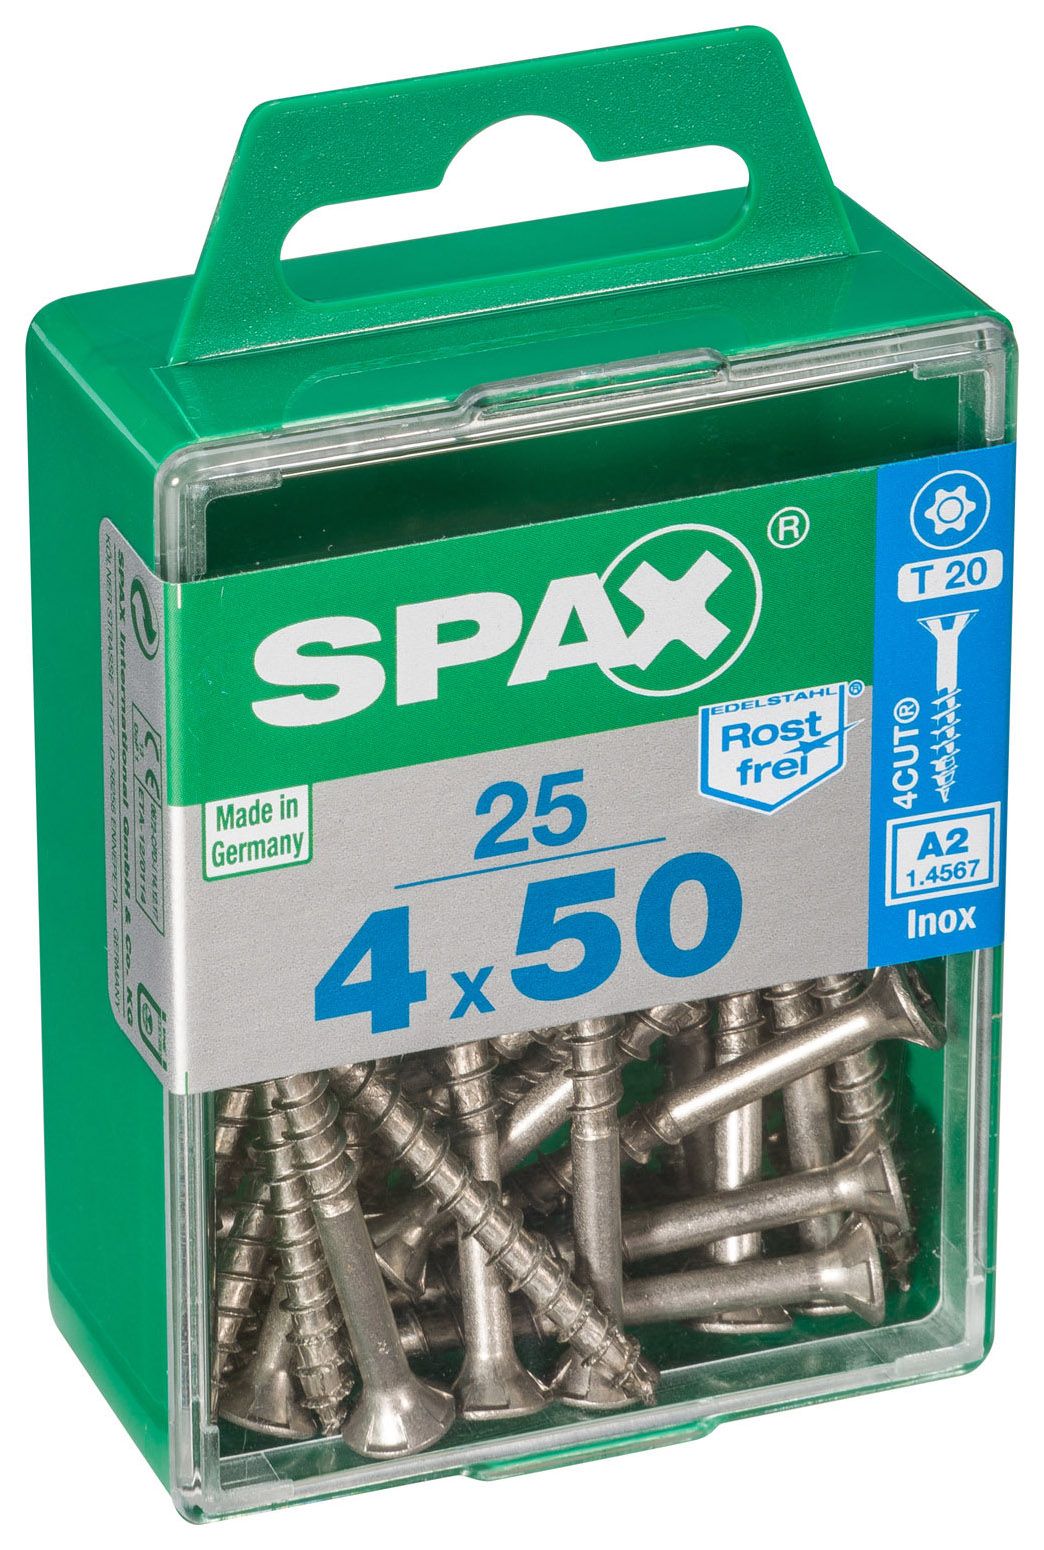 Spax Tx Countersunk Stainless Steel Screws - 4 X 50mm Pack Of 25